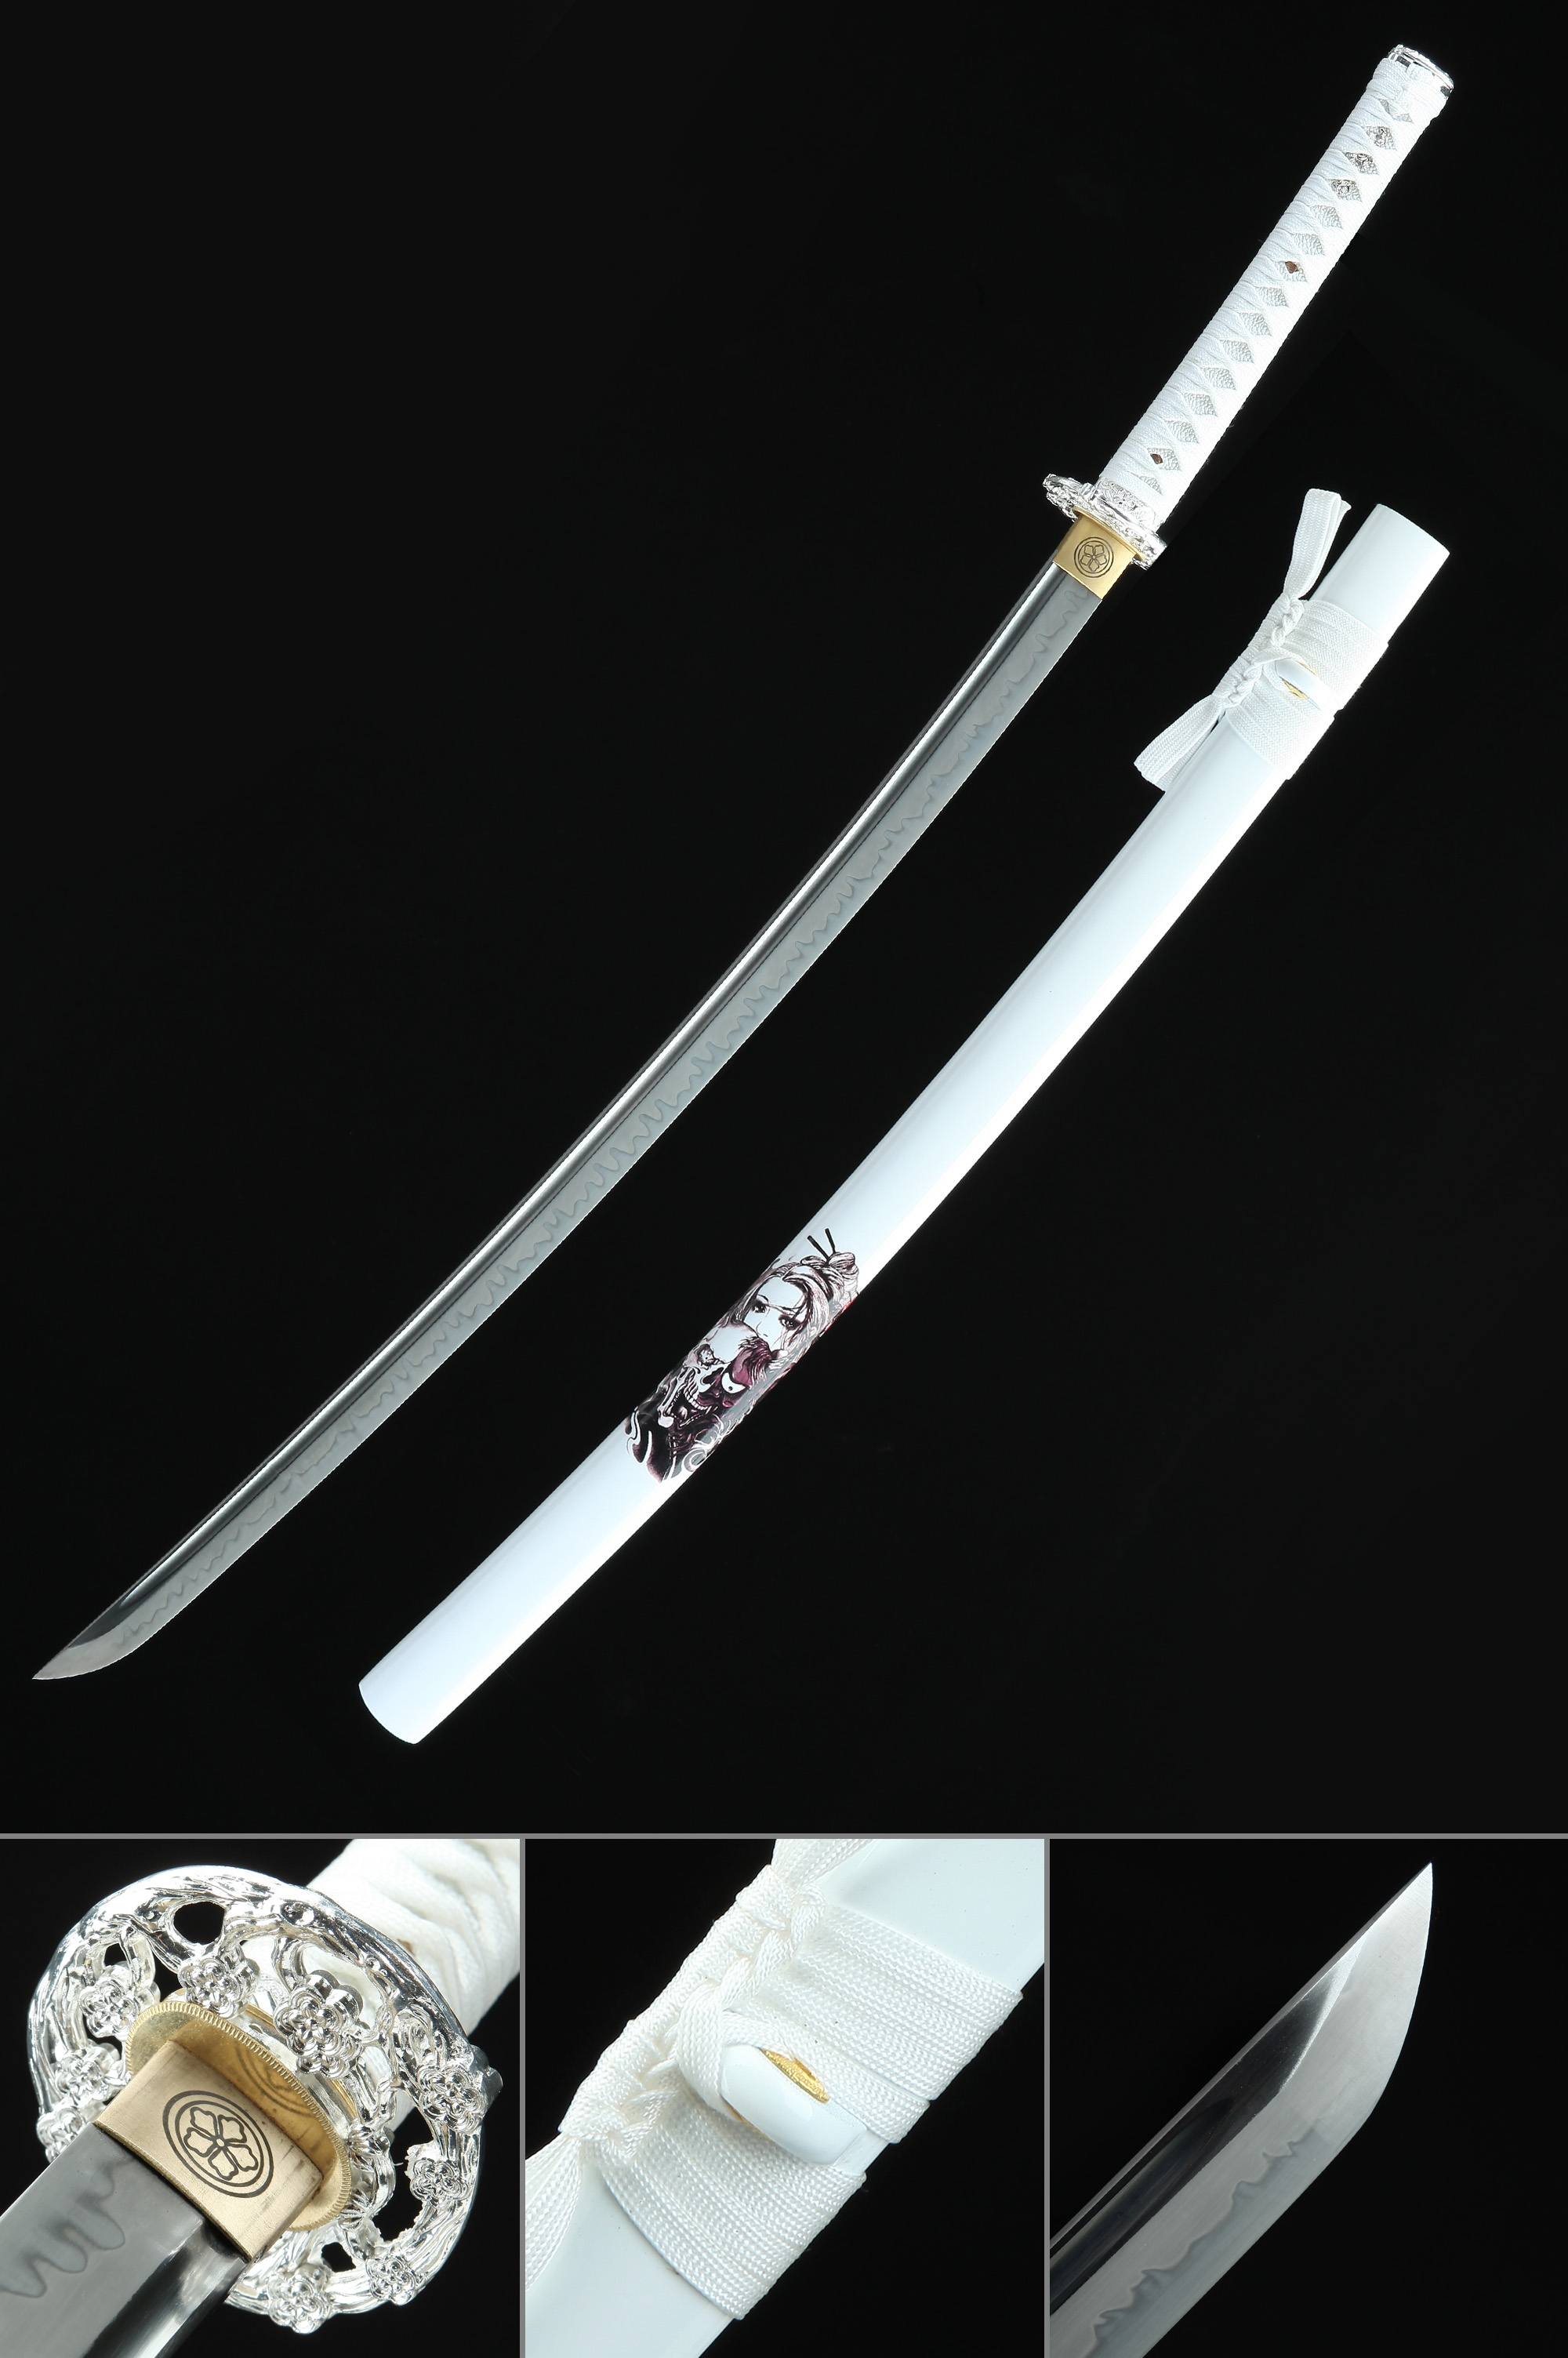  Shinken of Swords Espada Katana hecha a mano de arcilla real  templada, hamón de acero T10, espada samurái japonesa afilada de espiga  completa (latón, ciruelo, tsuba, arcilla templada, acero T10) 